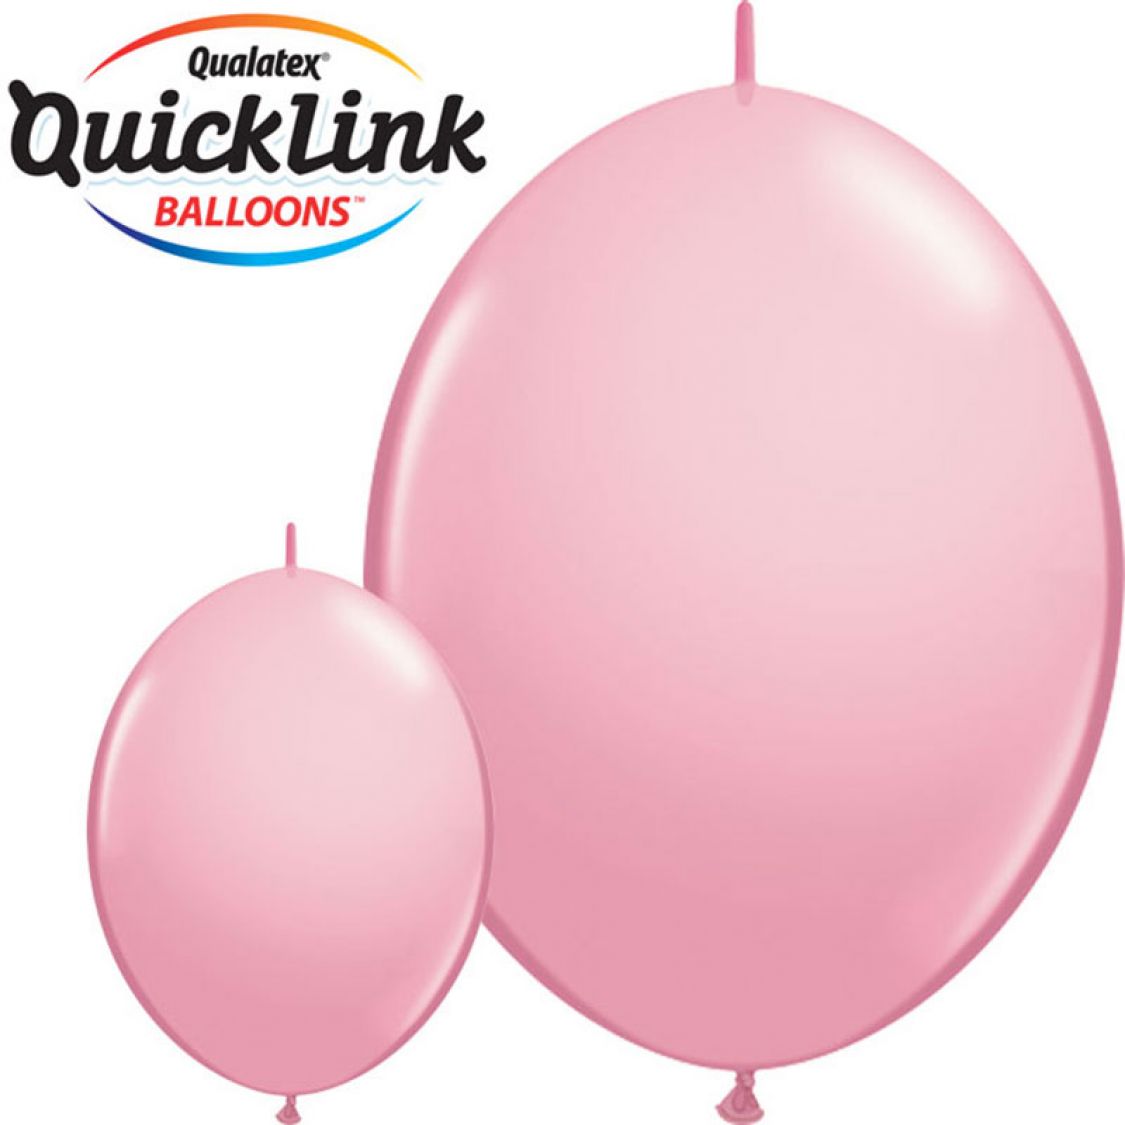 Ballon Quicklink Pink (Rose)